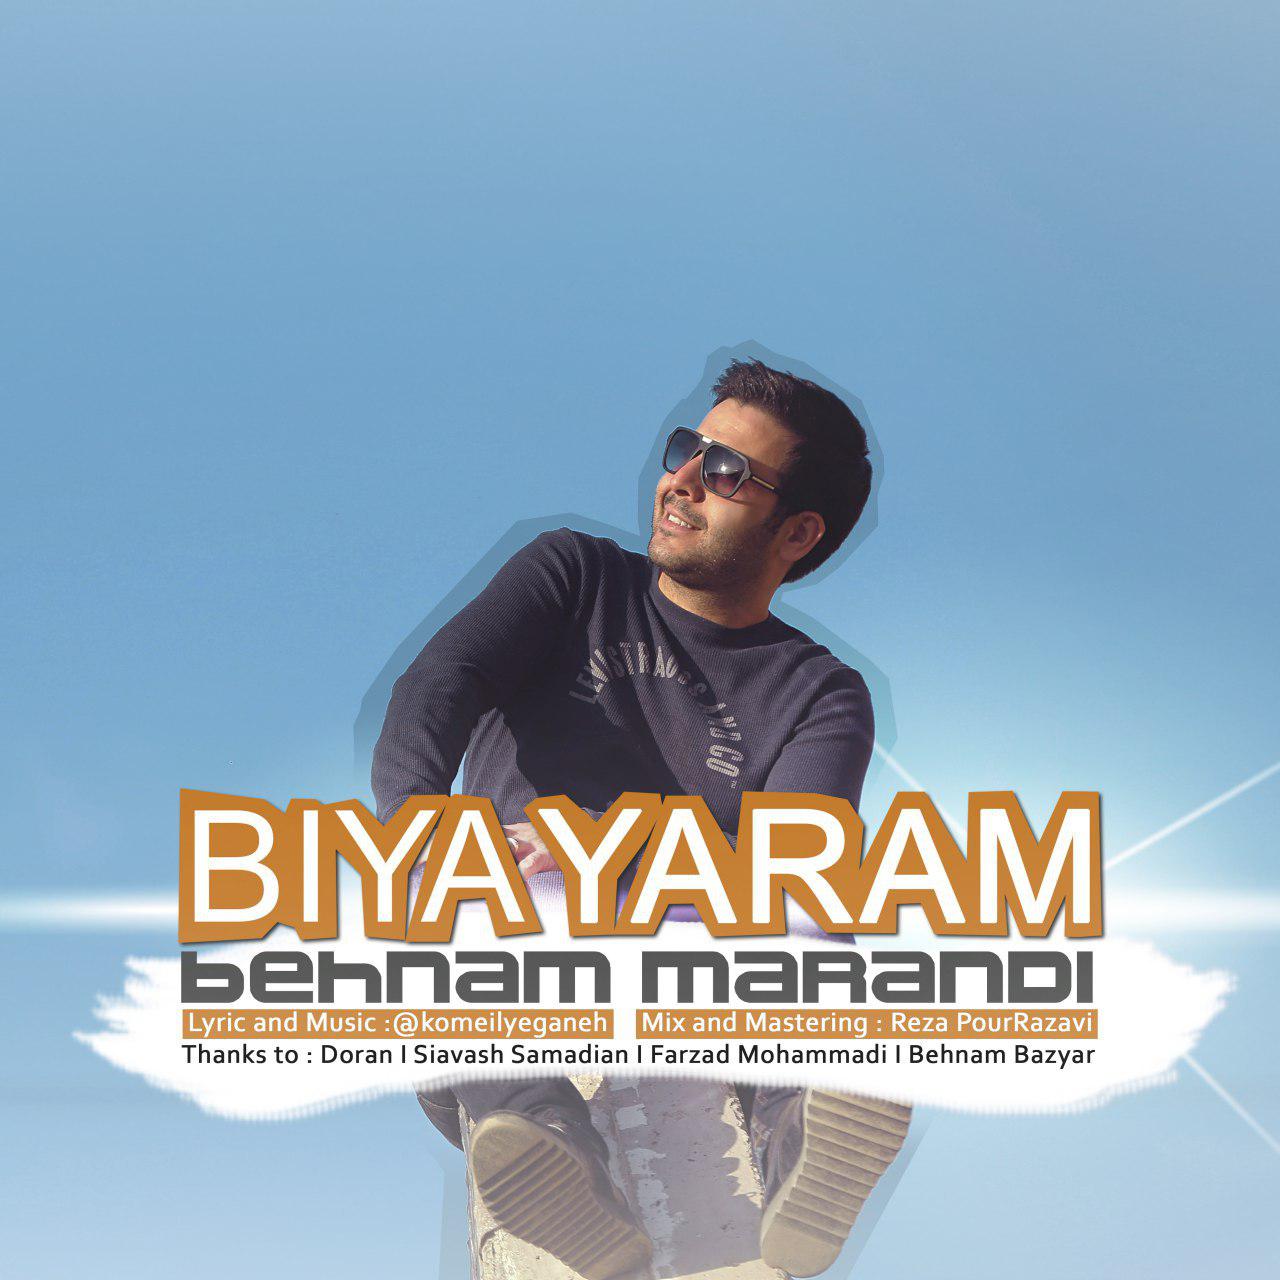  دانلود آهنگ جدید بهنام مرندی - بیا یارم | Download New Music By Behnam Marandi - Biya Yaram